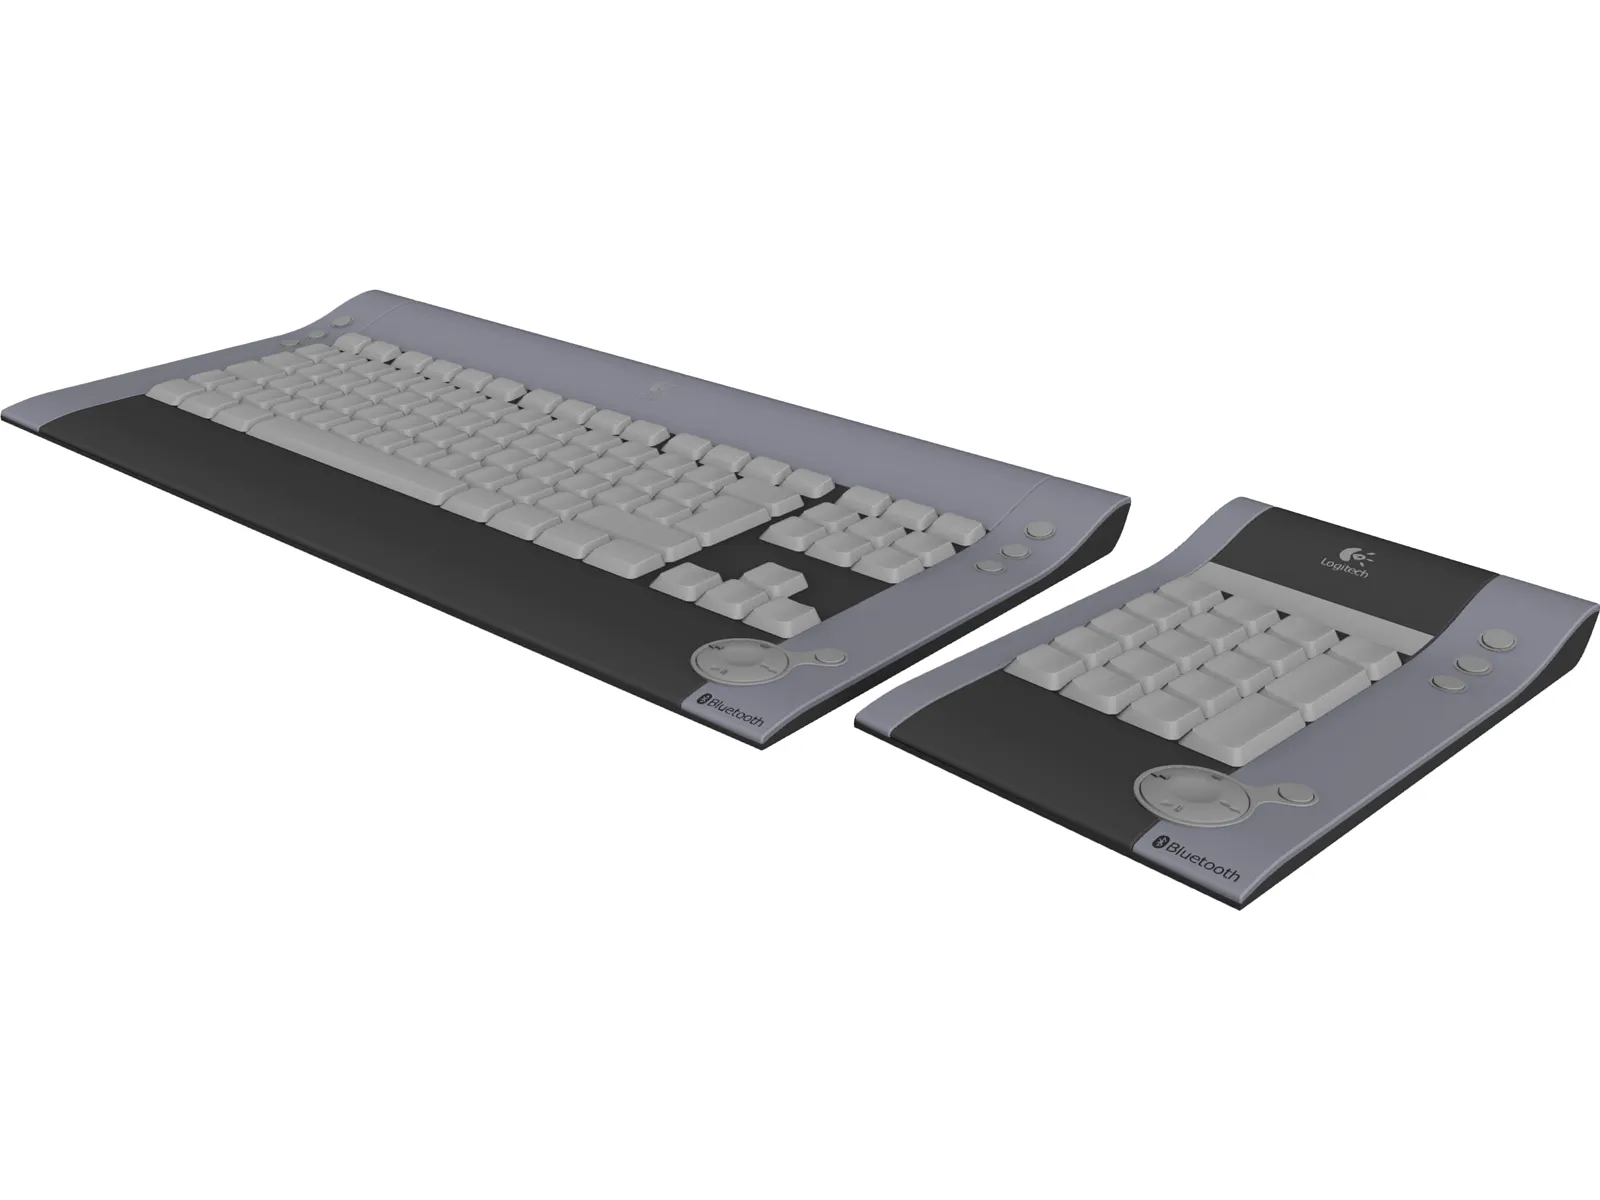 Logitech diNovo Keyboard 3D Model